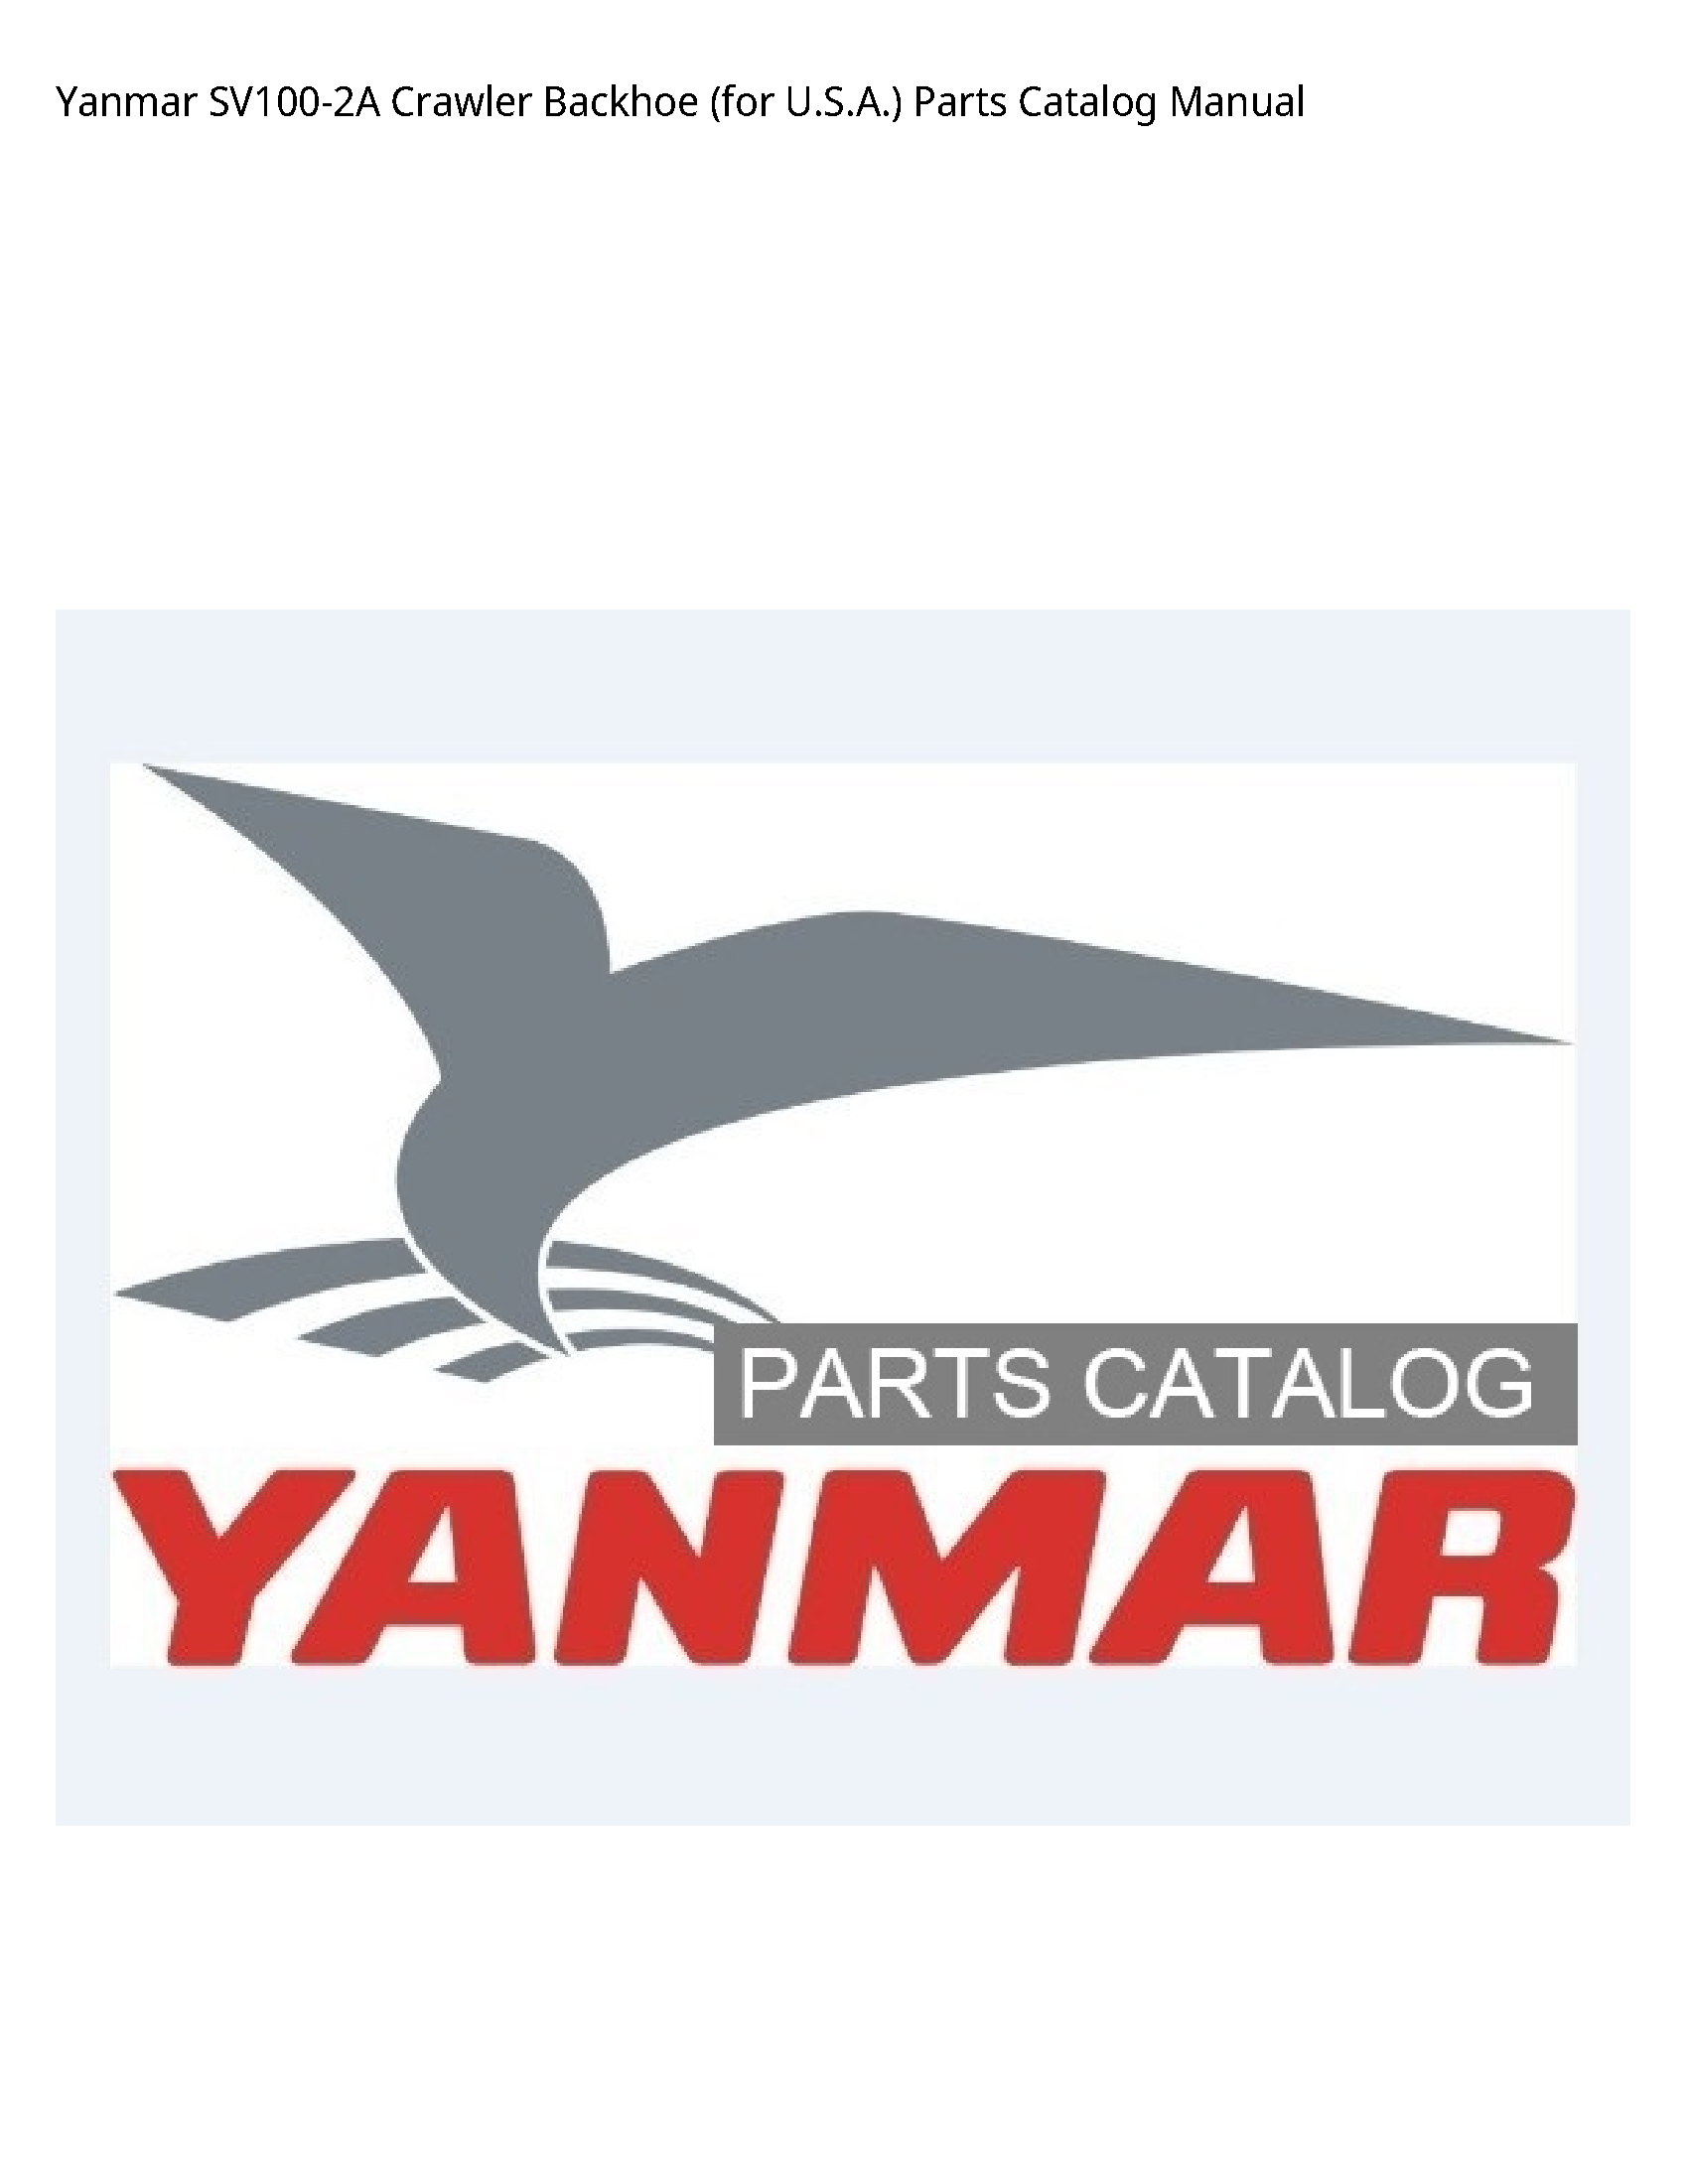 Yanmar SV100-2A Crawler Backhoe (for U.S.A.) Parts Catalog manual